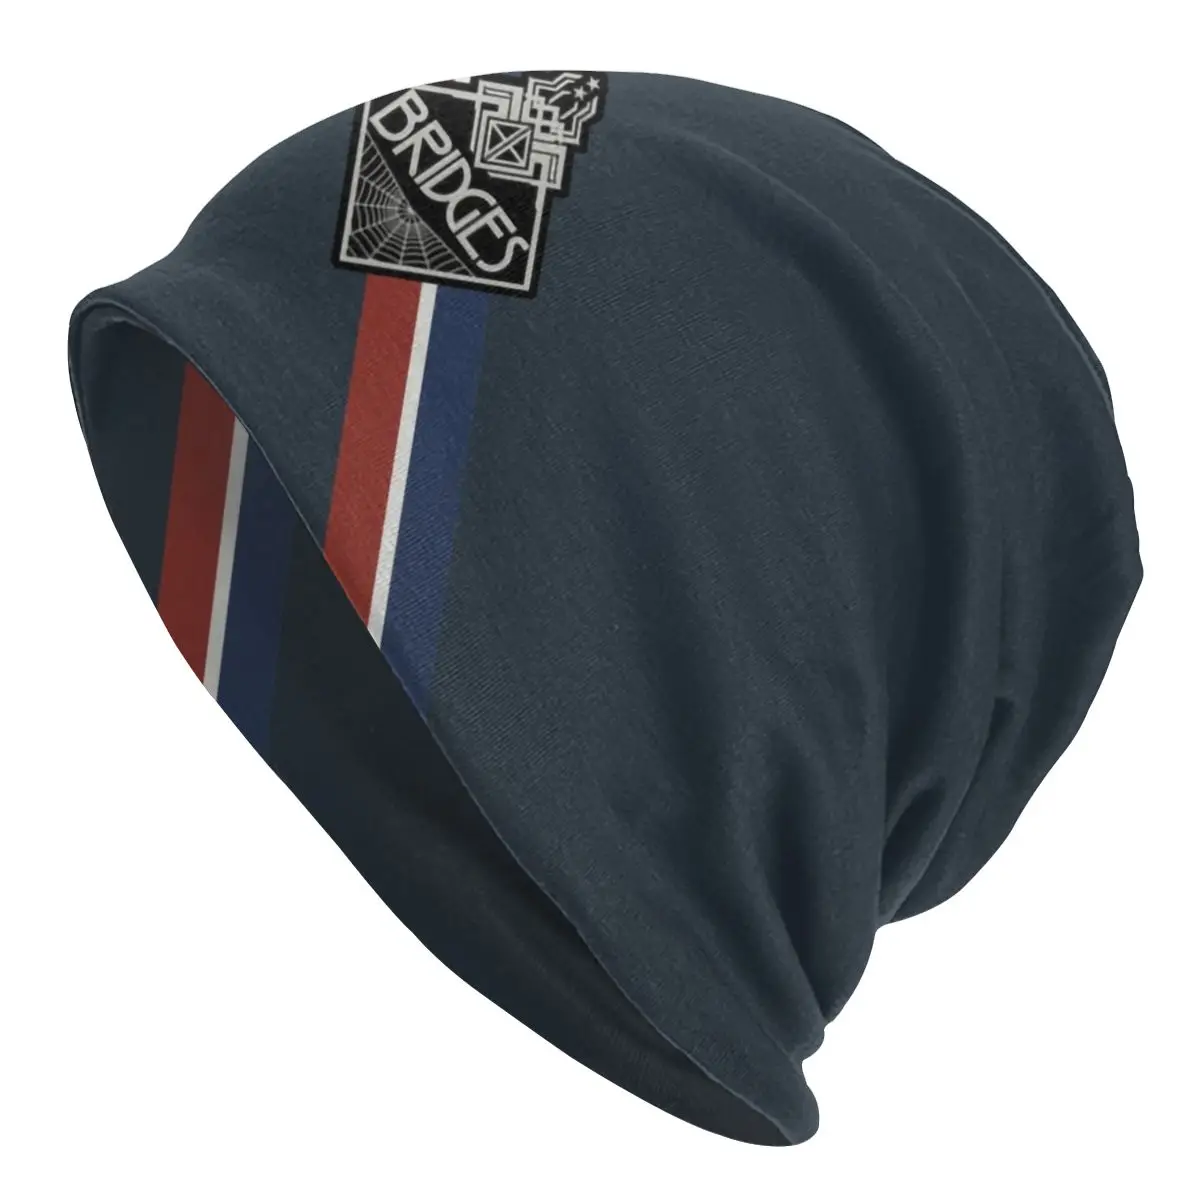 

Action Game Death Stranding Bonnet Femme Cool Knitting Hat For Men Women Autumn Winter Warm Bridges Logo Beanies Caps